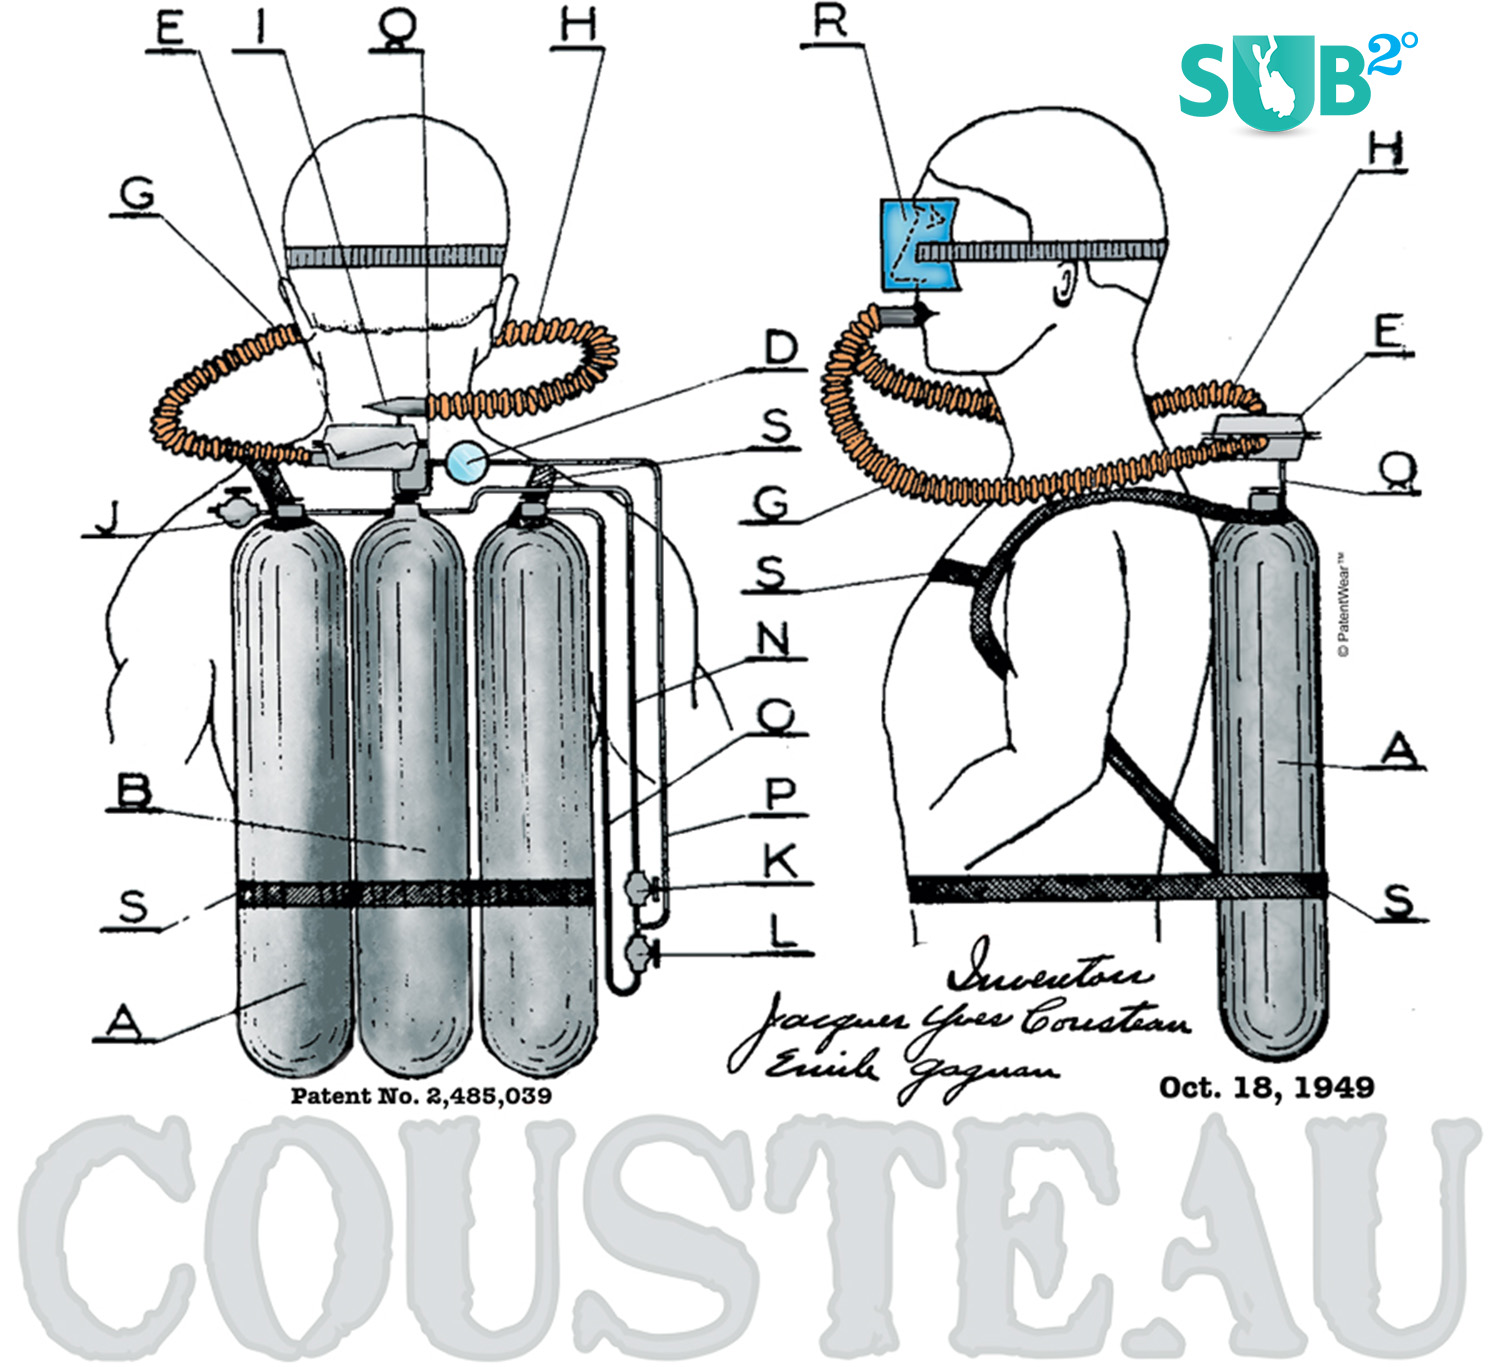 PatentWear.com Cousteau